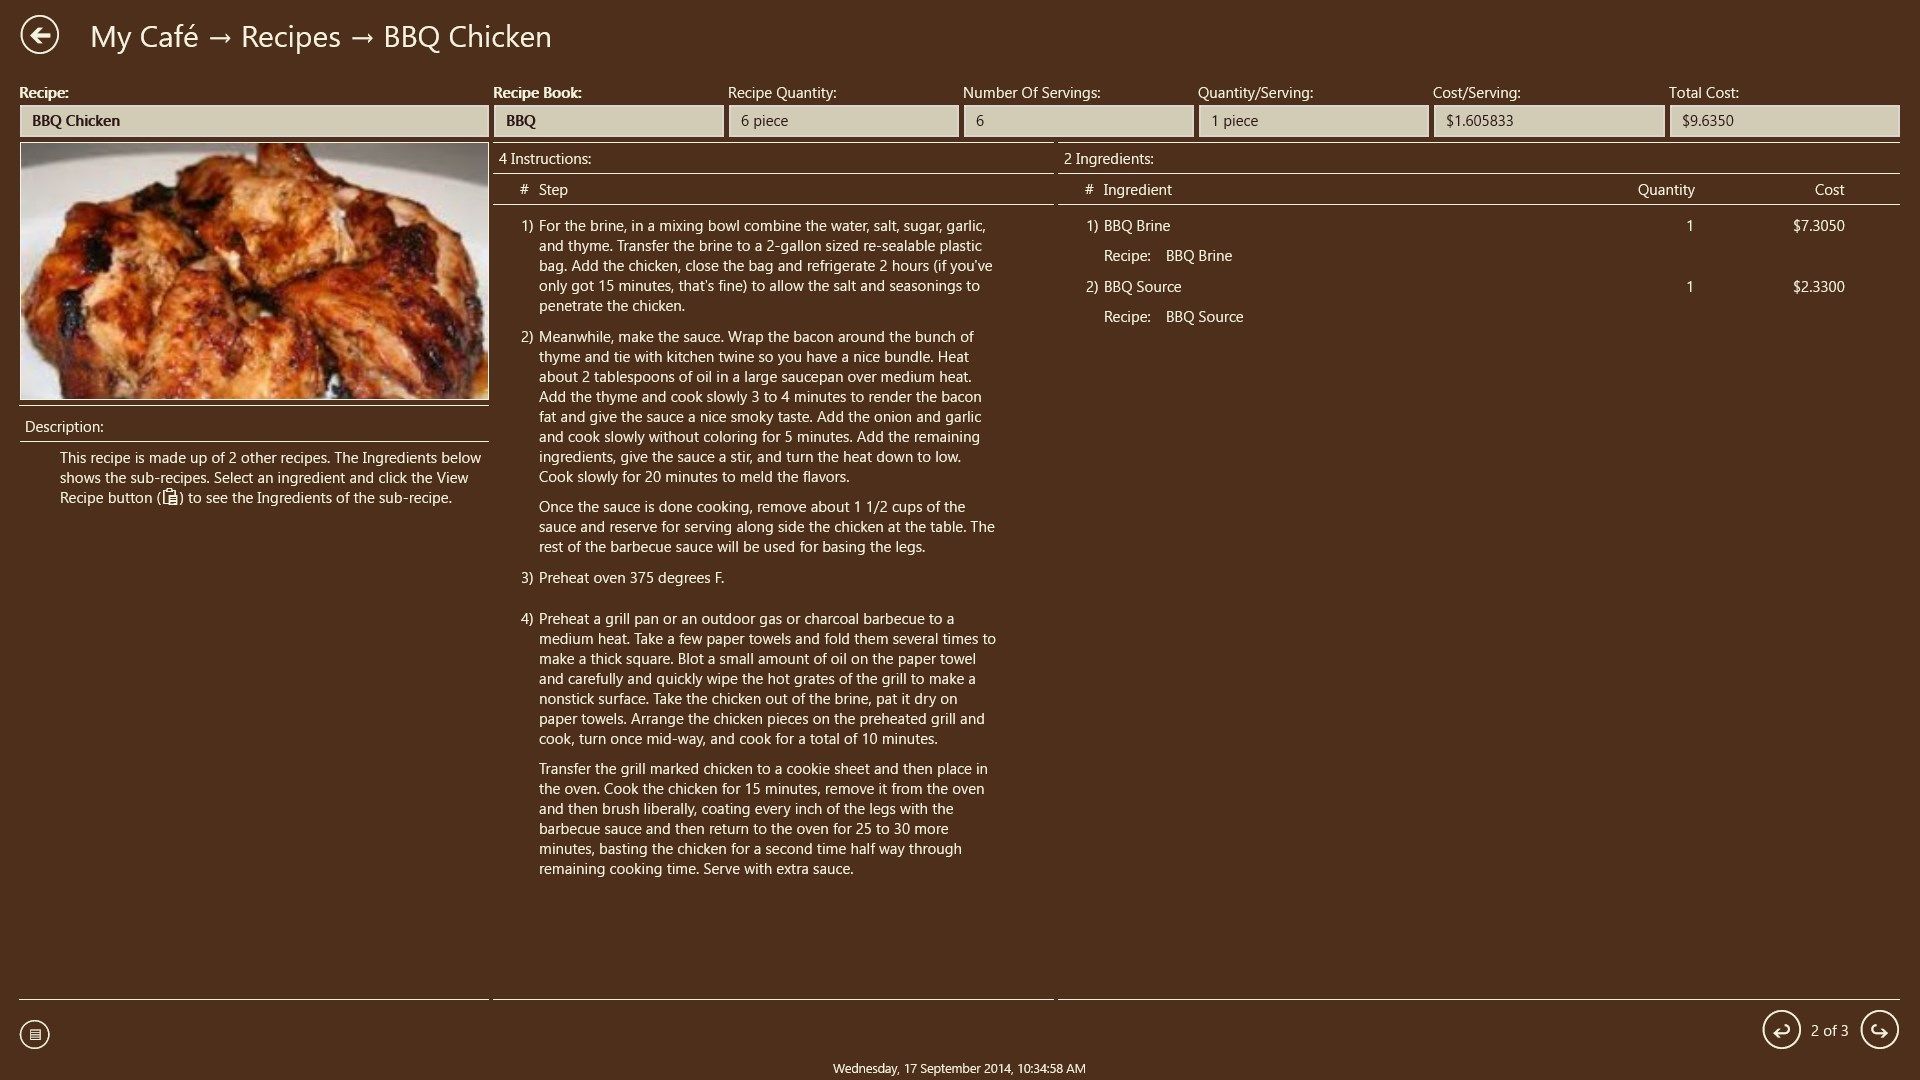 Sample BBQ Chicken Recipe with 2 Sub-Recipes